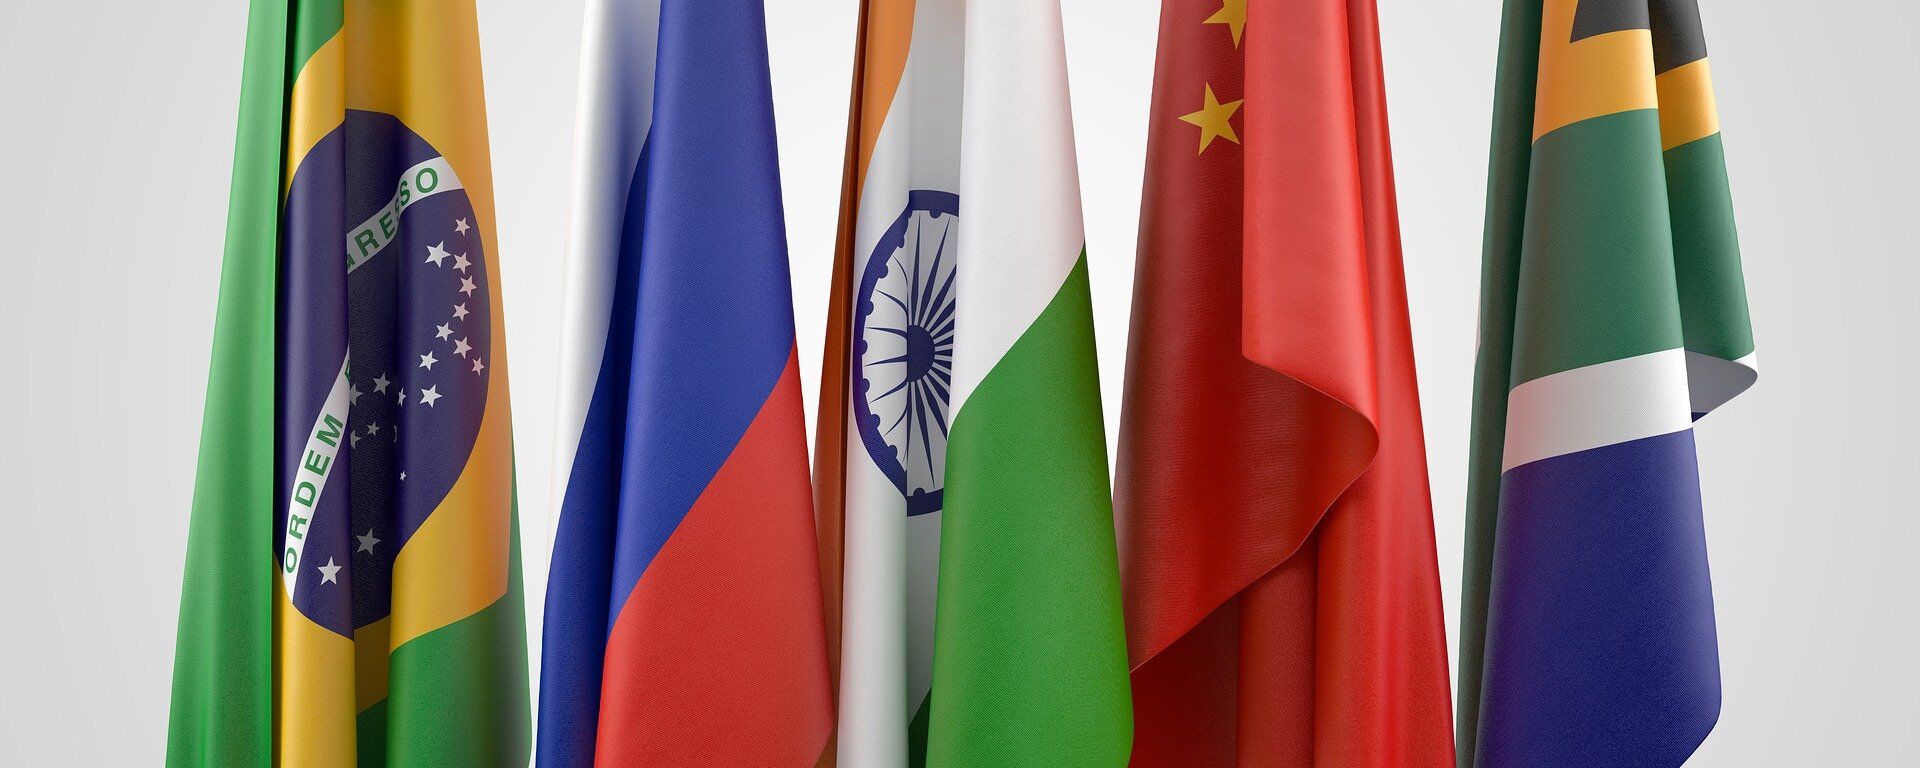 Banderas de los países BRICS: Brasil, Rusia, India, China y Sudáfrica  - Sputnik Mundo, 1920, 11.08.2022